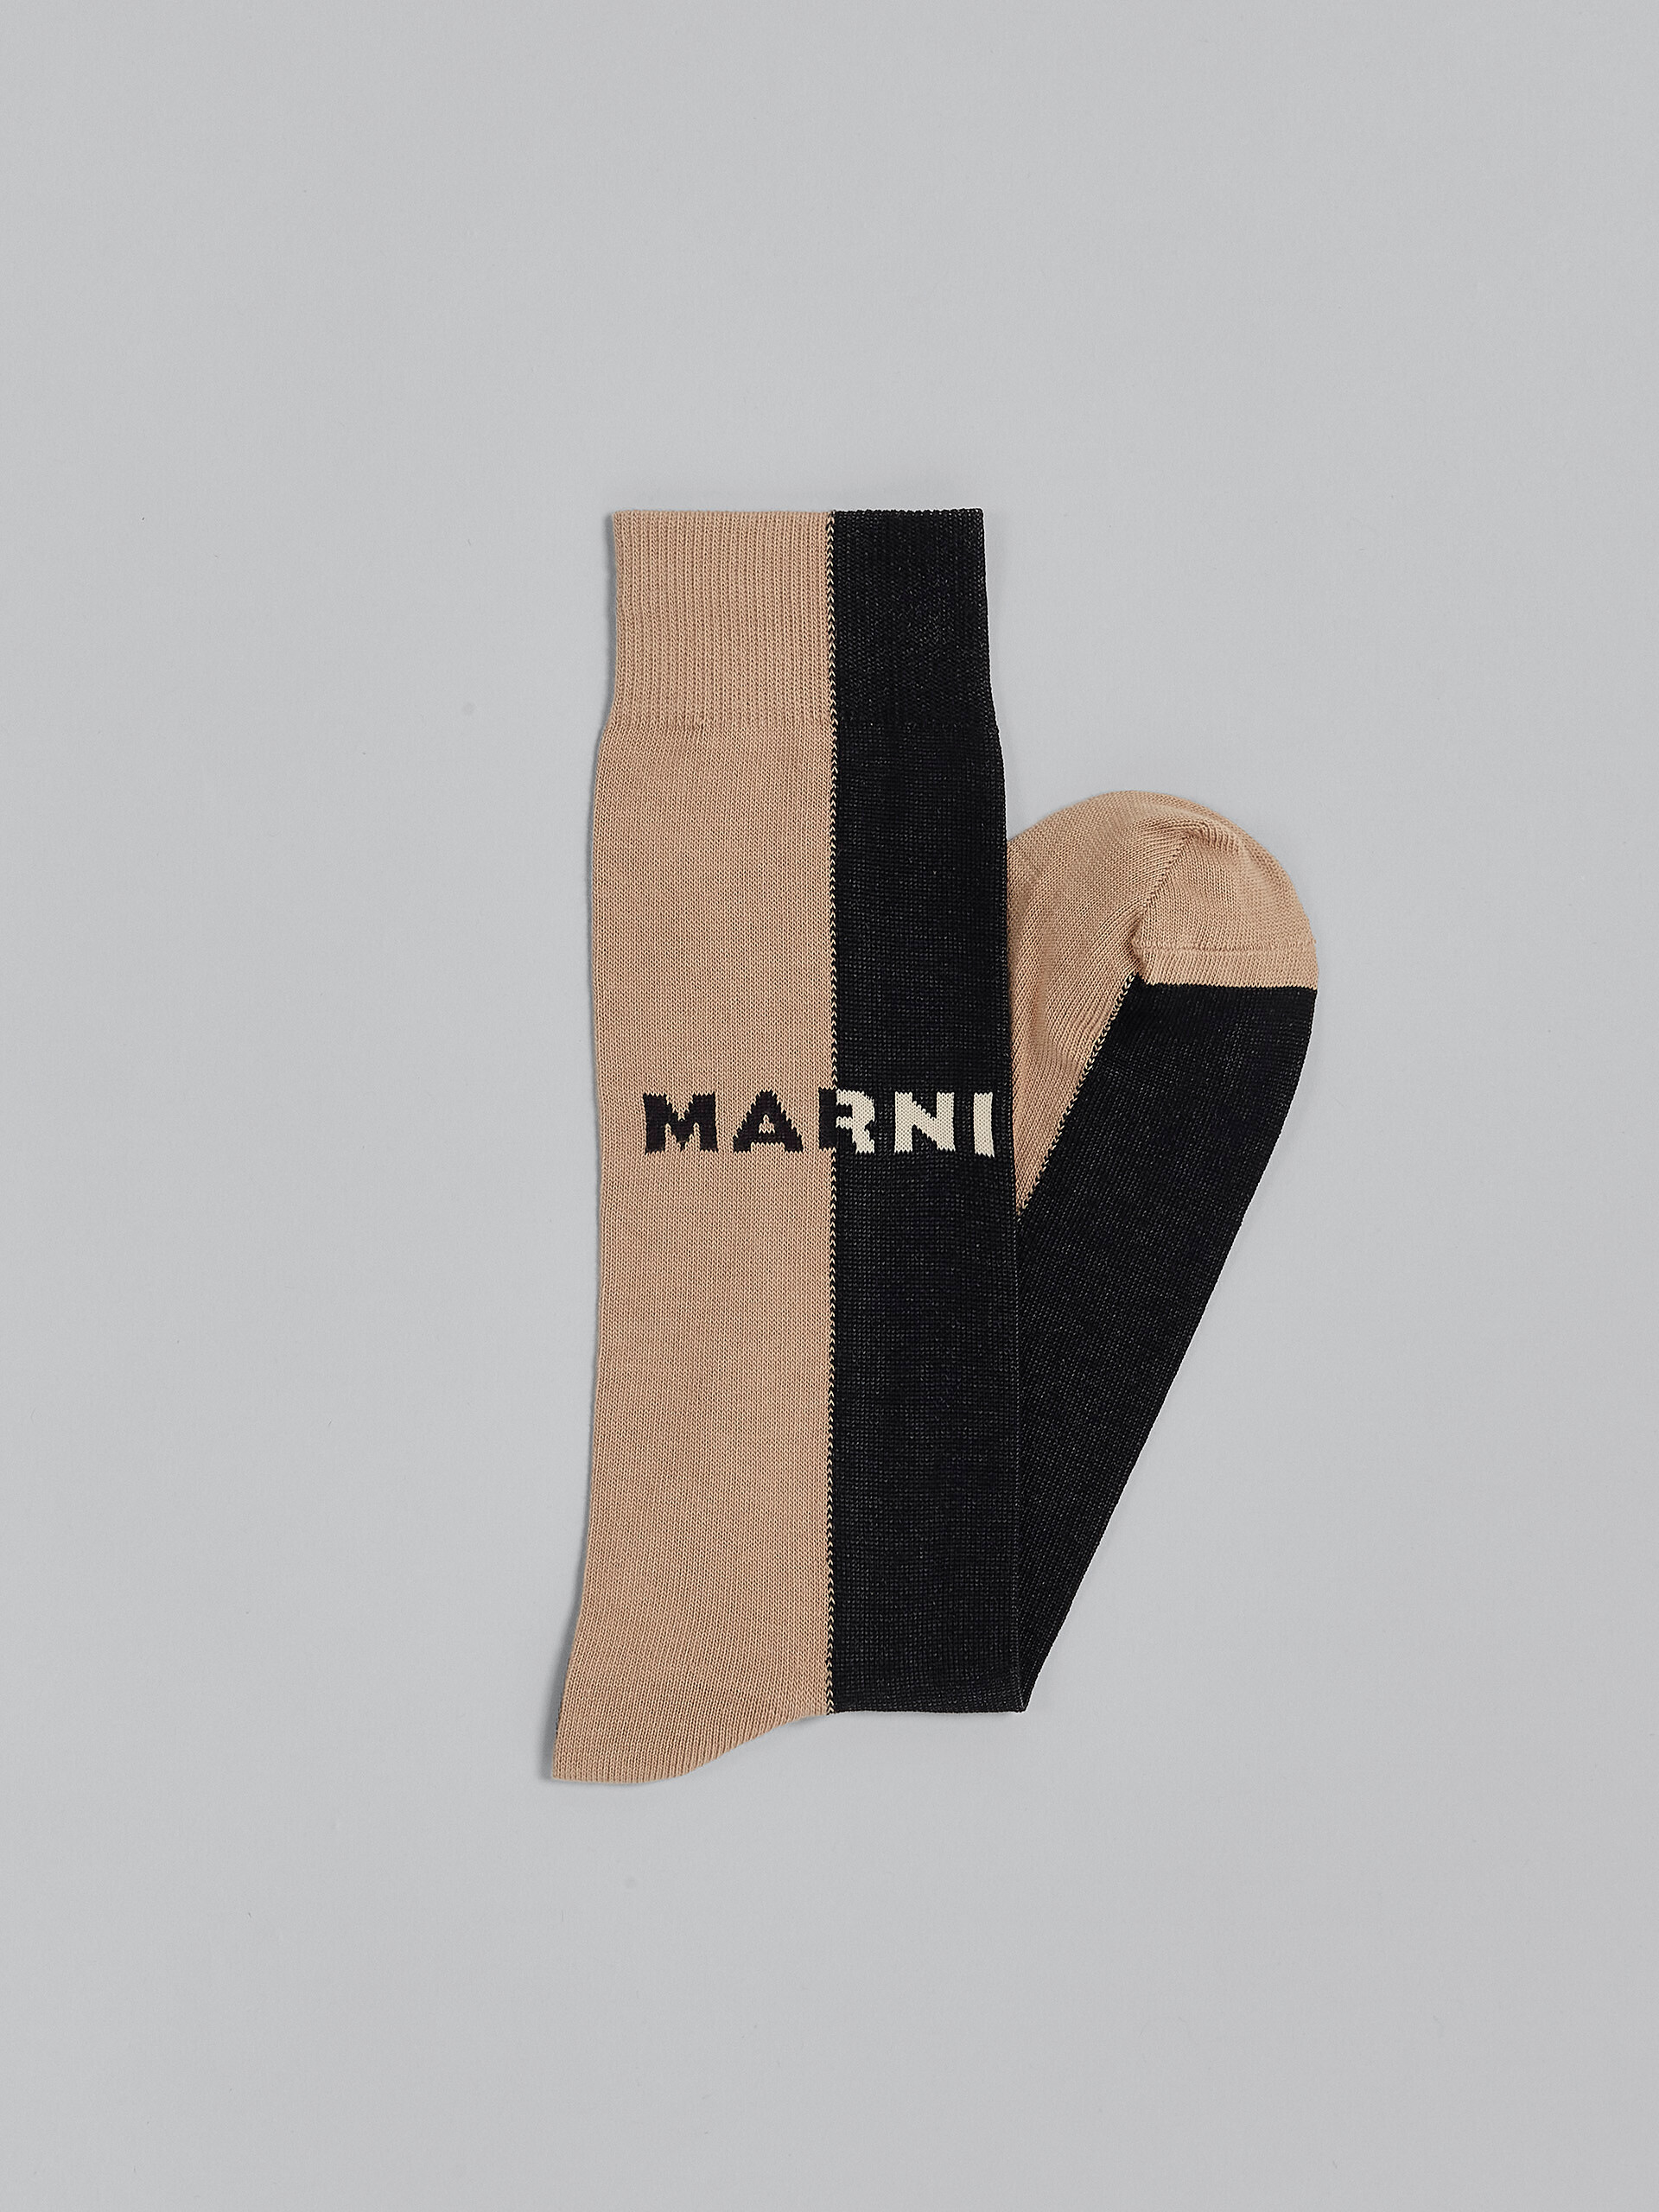 Black bi-coloured cotton and nylon socks - Socks - Image 2